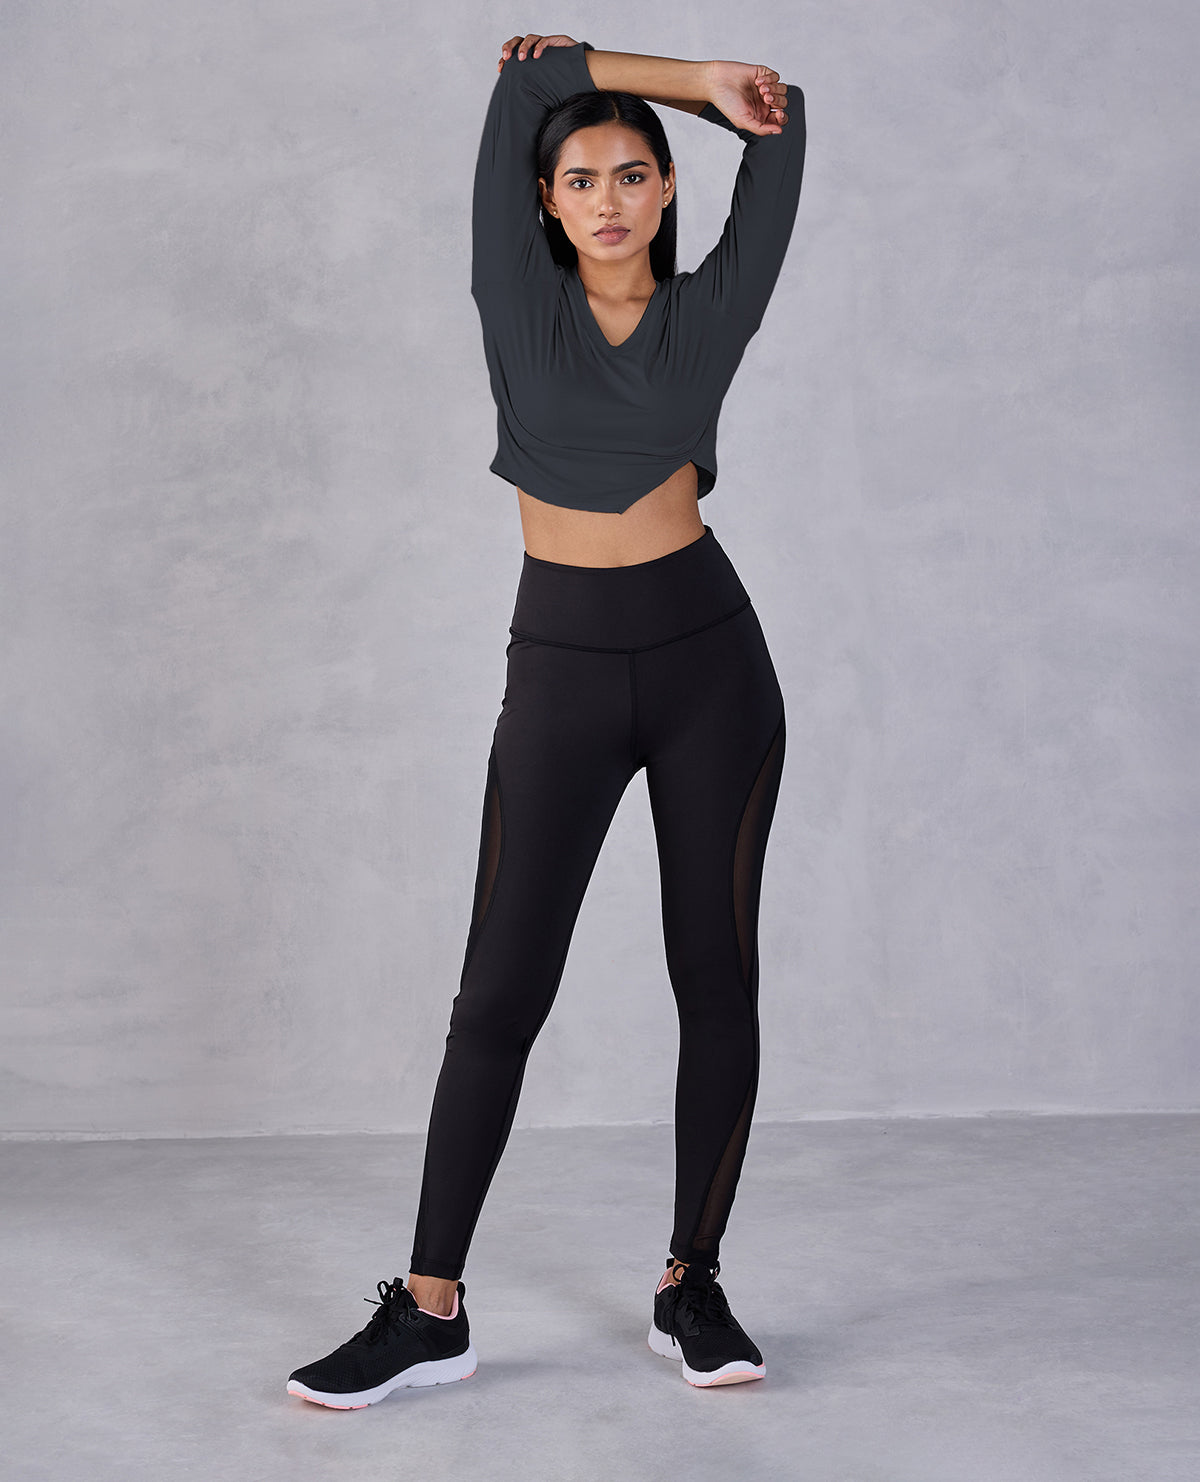 Women's Sportswear Leggings in Black Lycra with High Waist Slim Fit Effect  - GINNIKA - Invertika